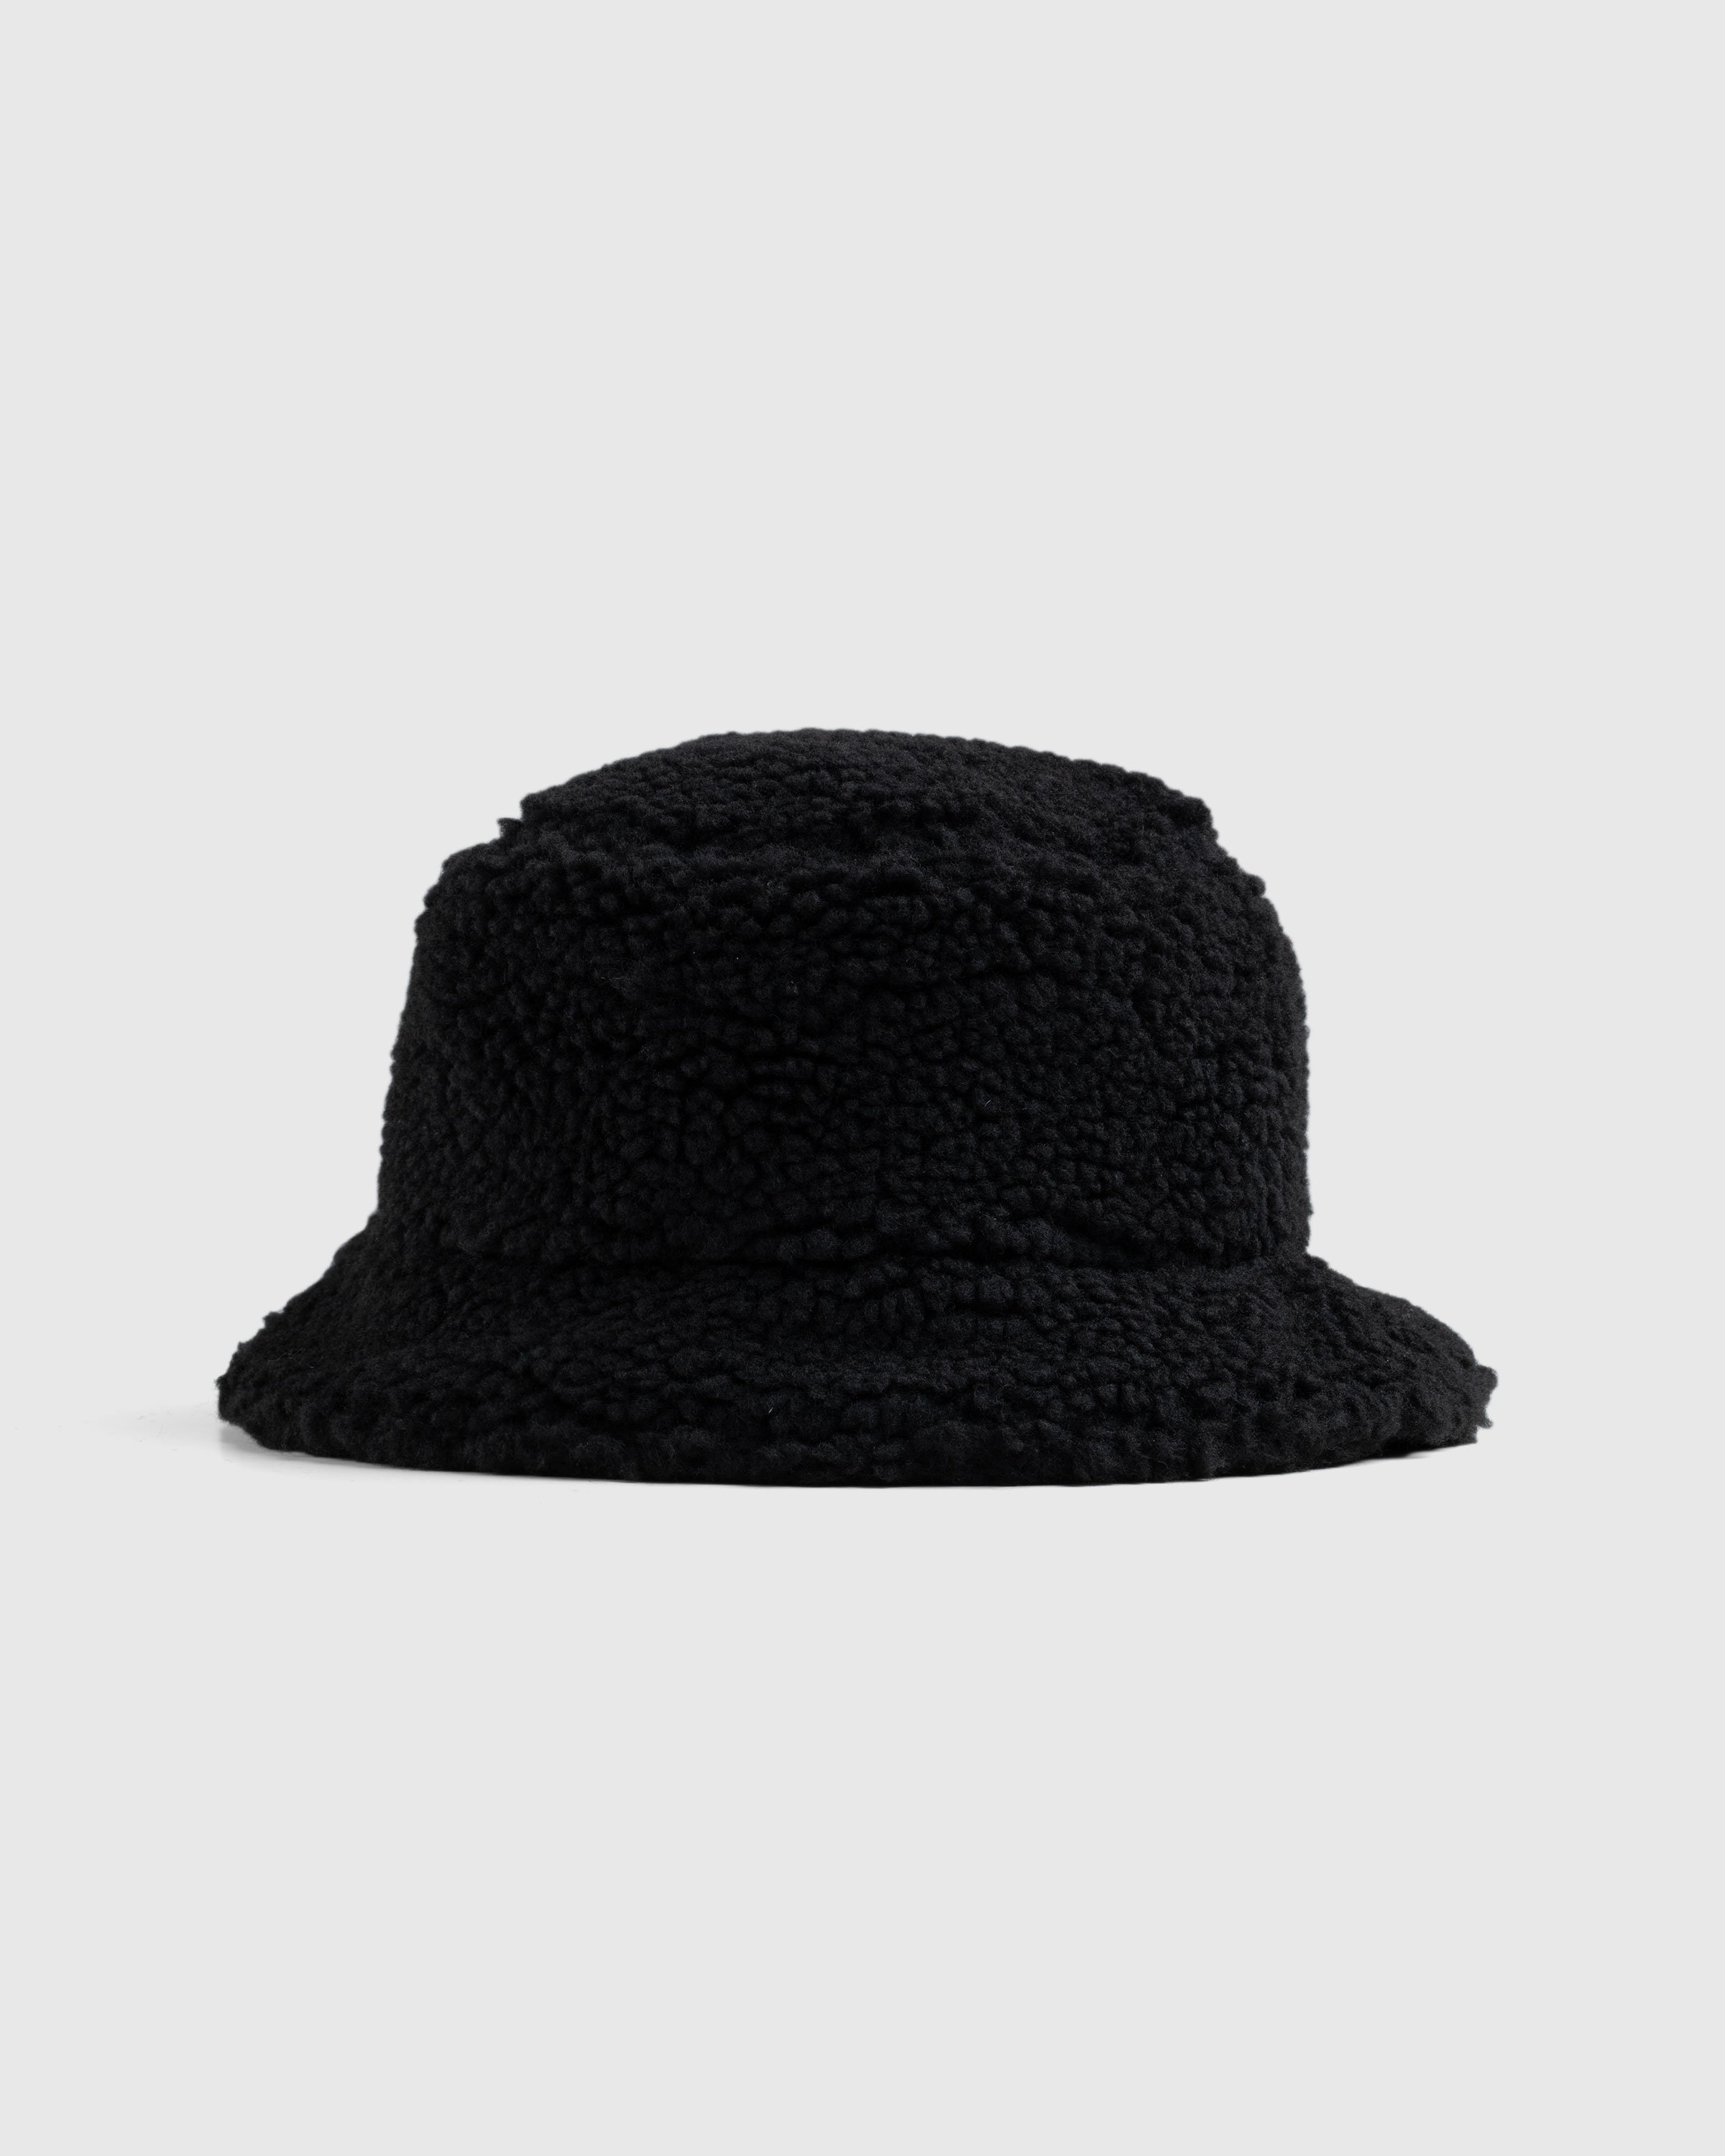 Carhartt WIP Prentis Bucket Hat - Black - S-M